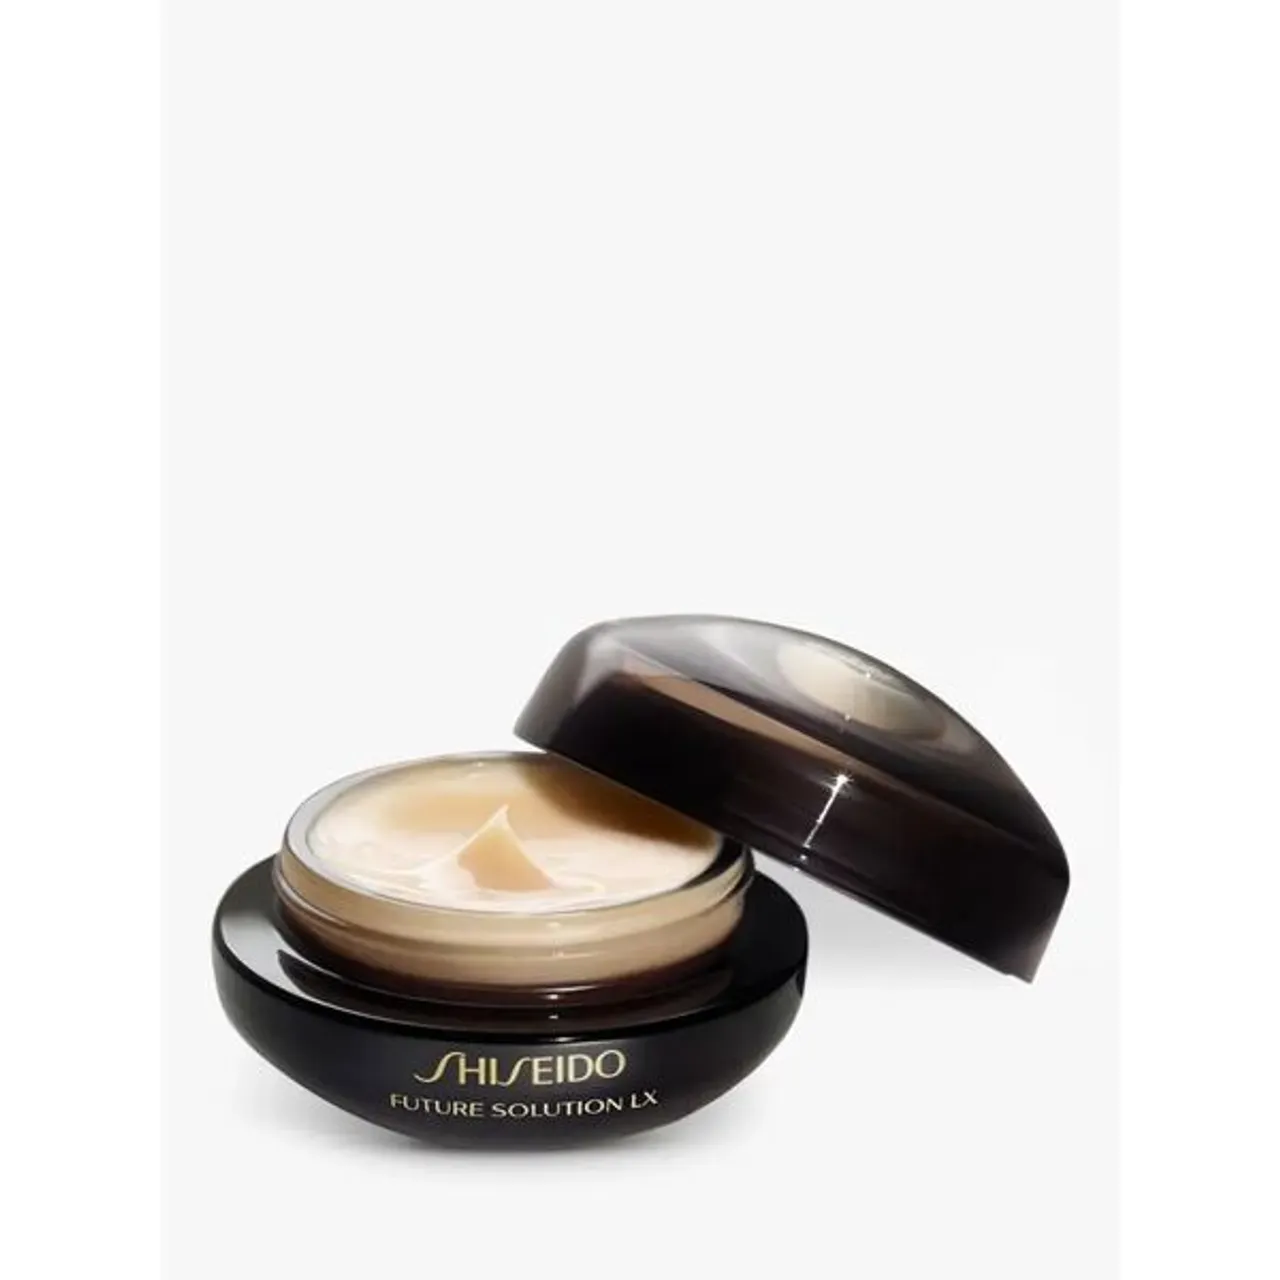 Shiseido Future Solution LX Eye & Lip Contour Regenerating Cream, 17ml - Unisex - Size: 17ml